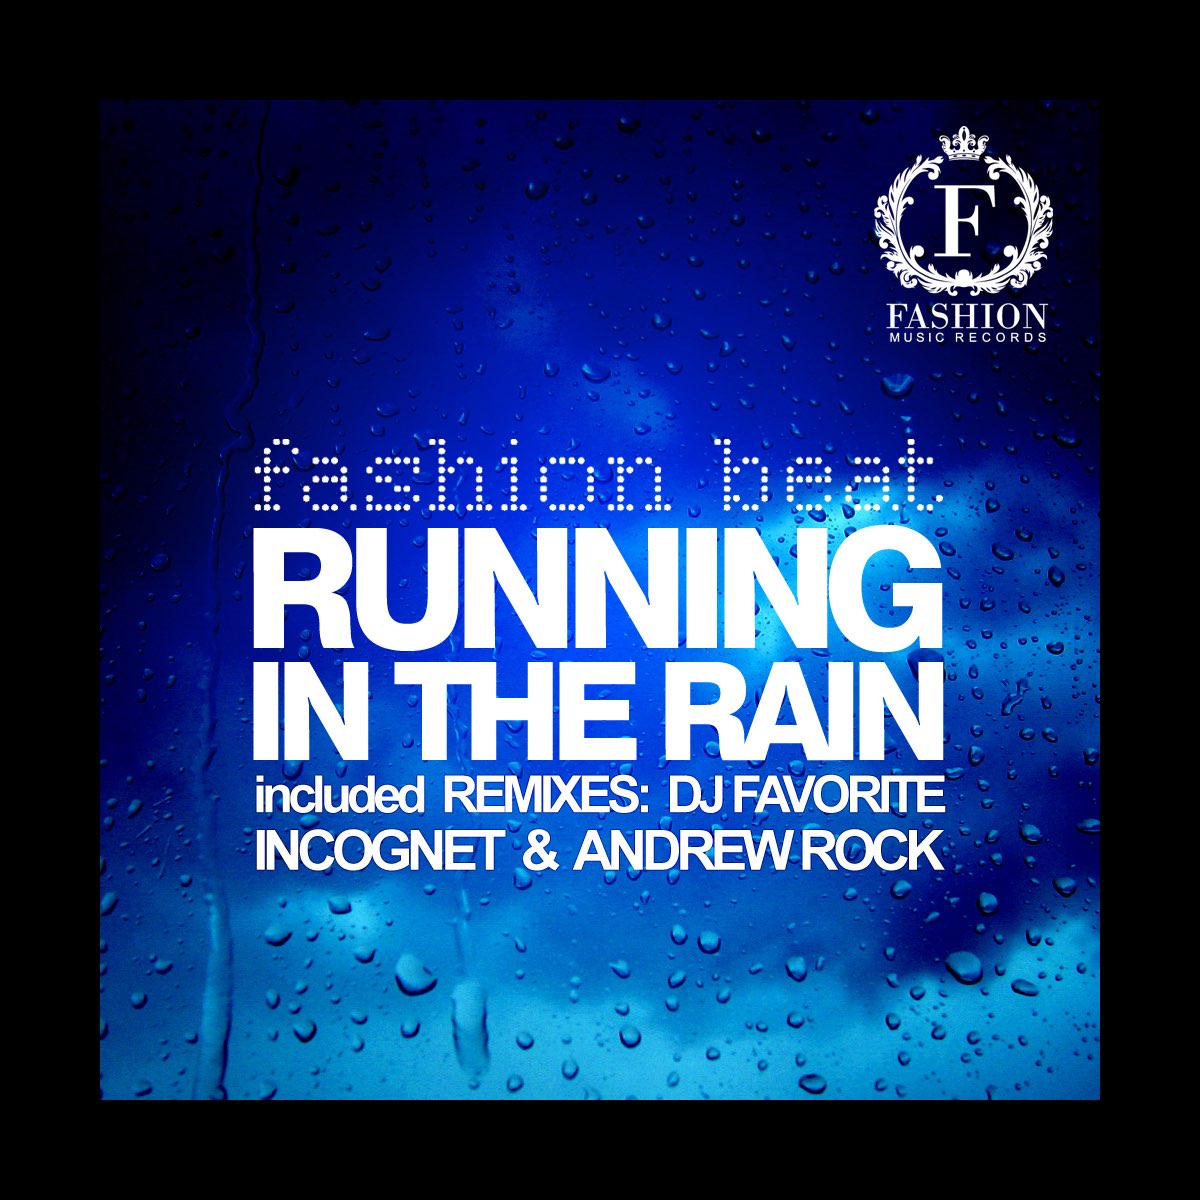 Fashion Beat. DJ Incognet Fashion Music records. The Rain Remix. Beatnik Fashion.